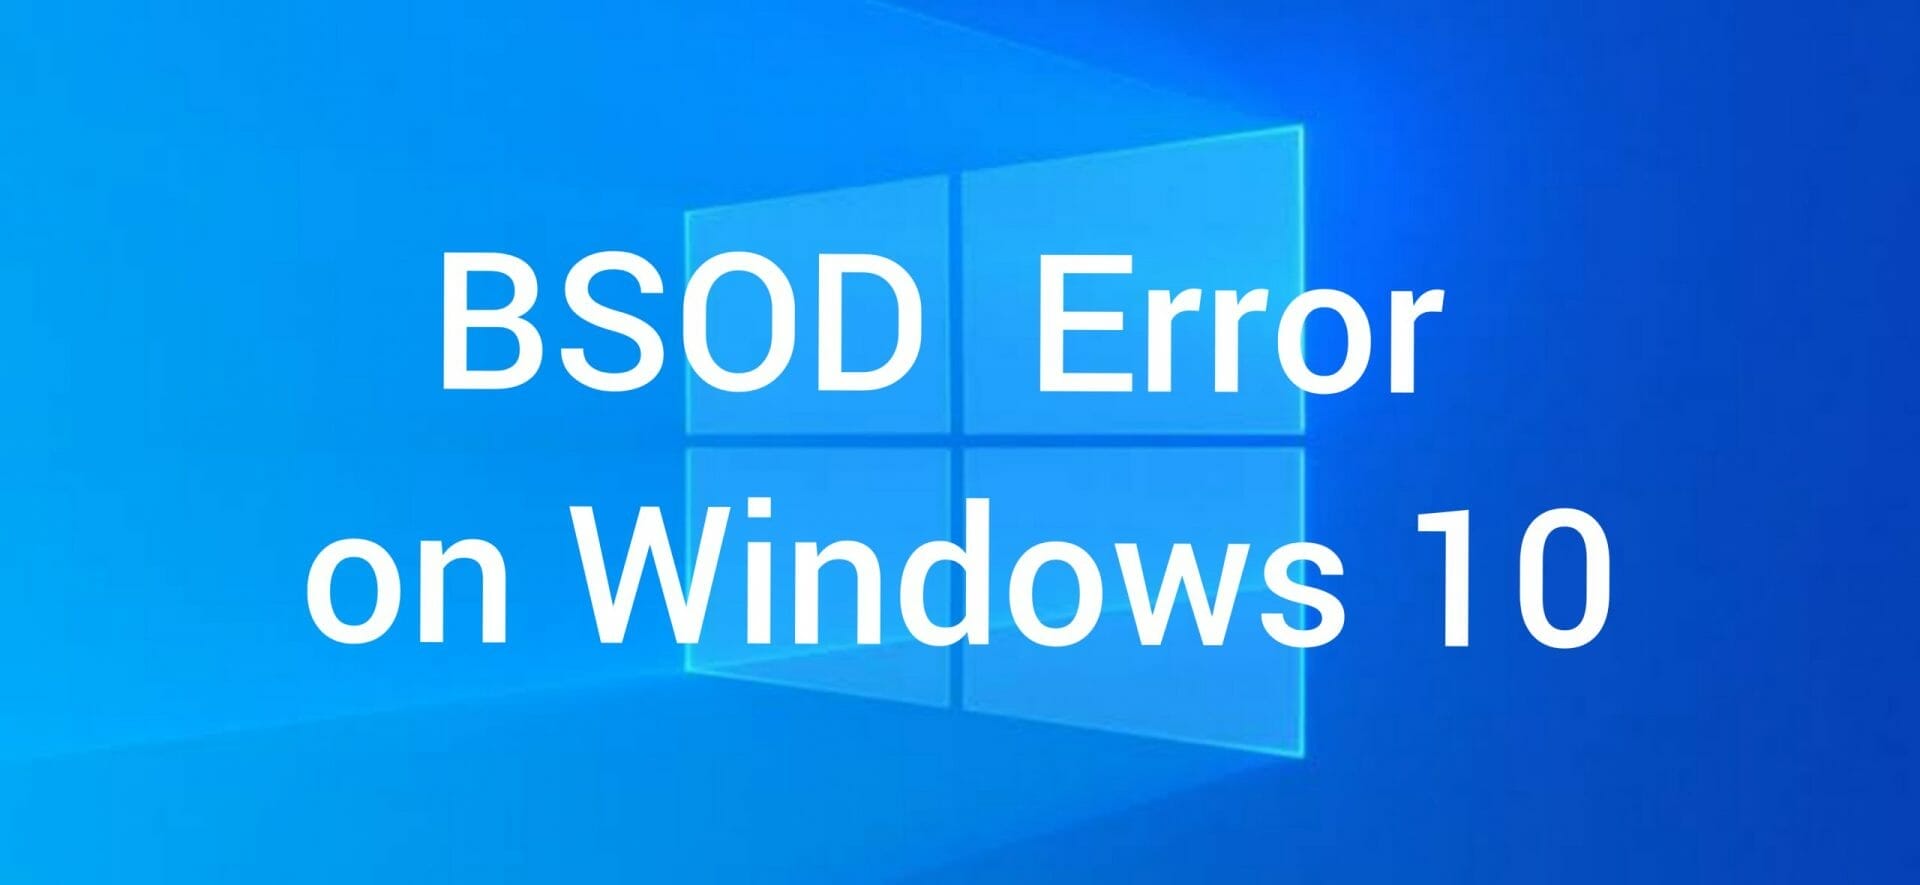 Bsod error on windows 10